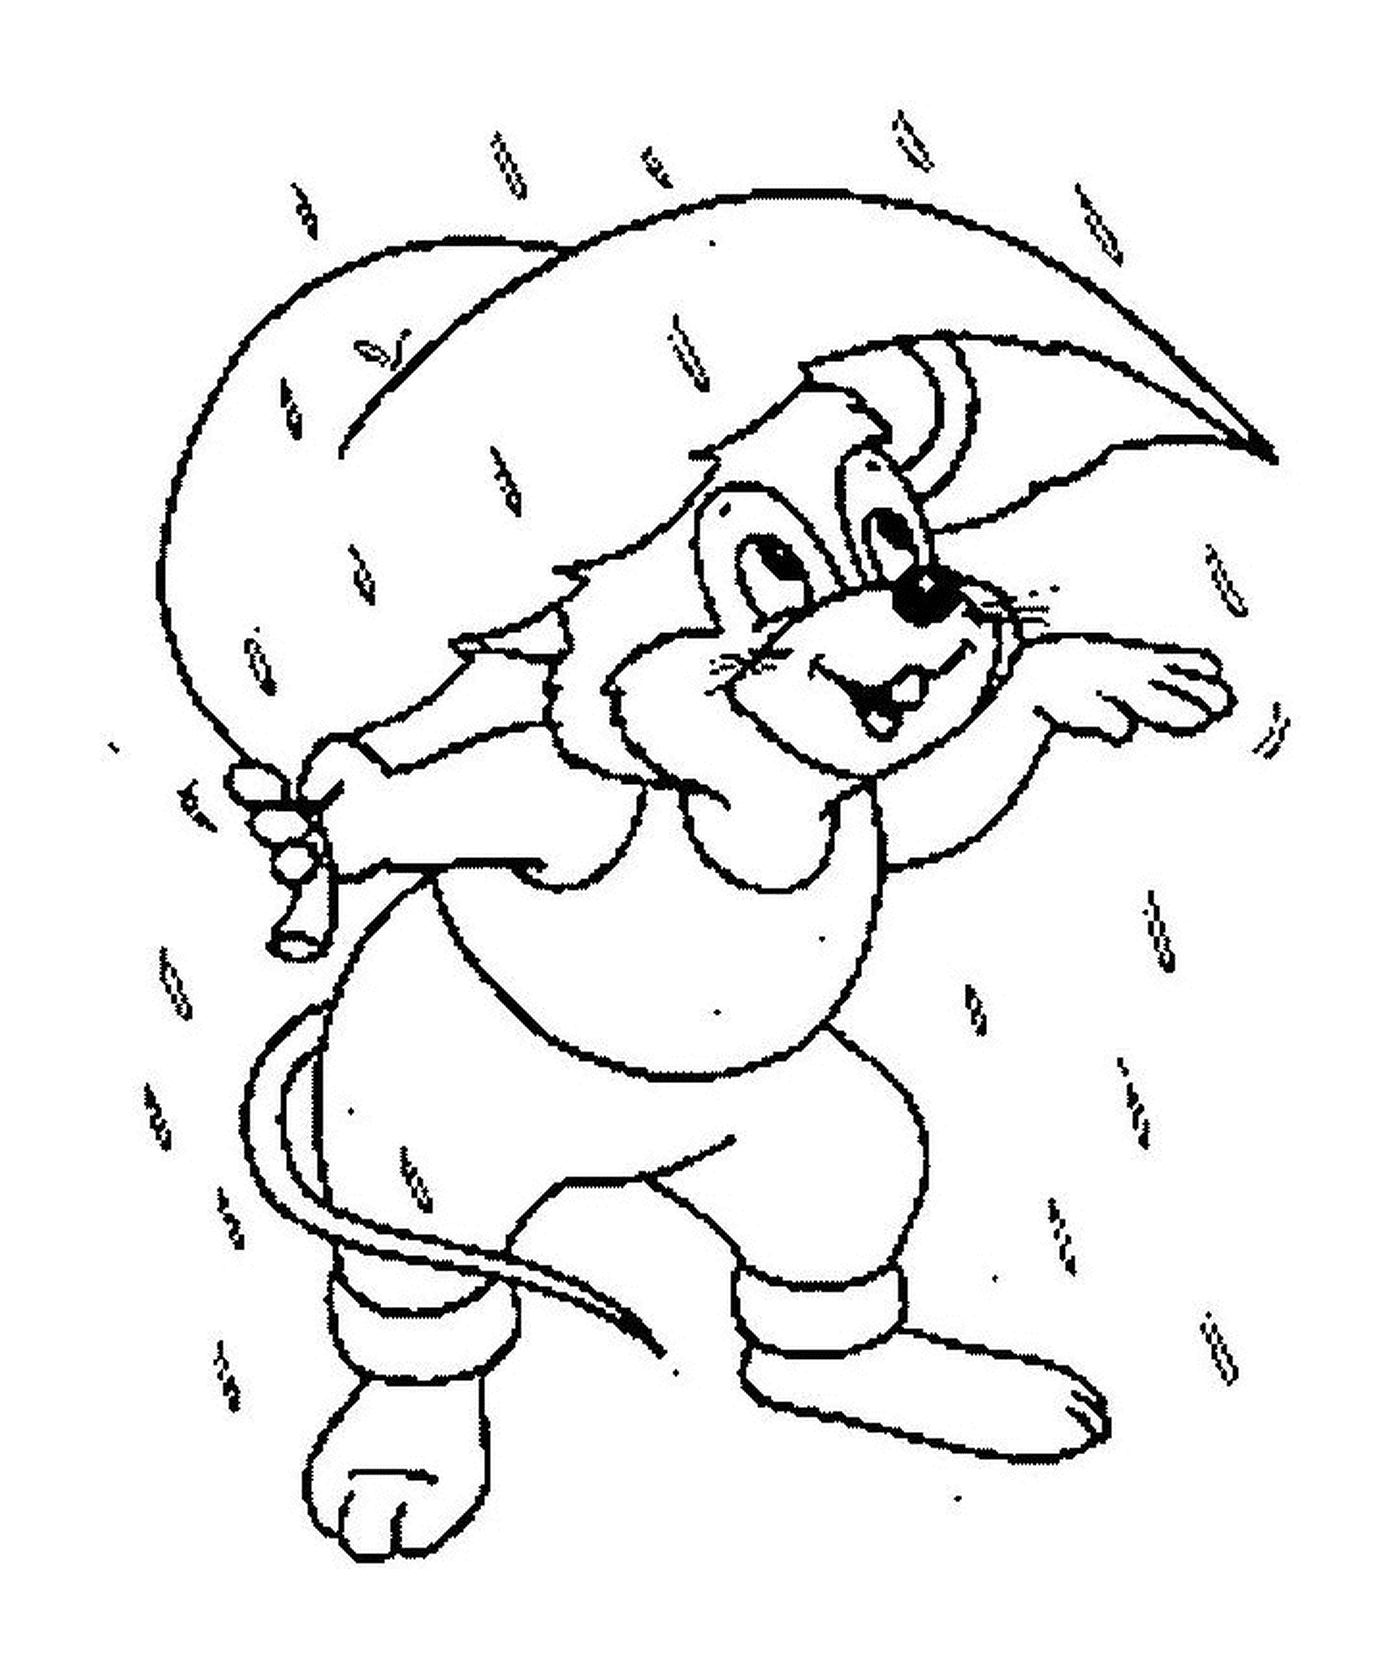  Um rato a proteger-se da chuva 